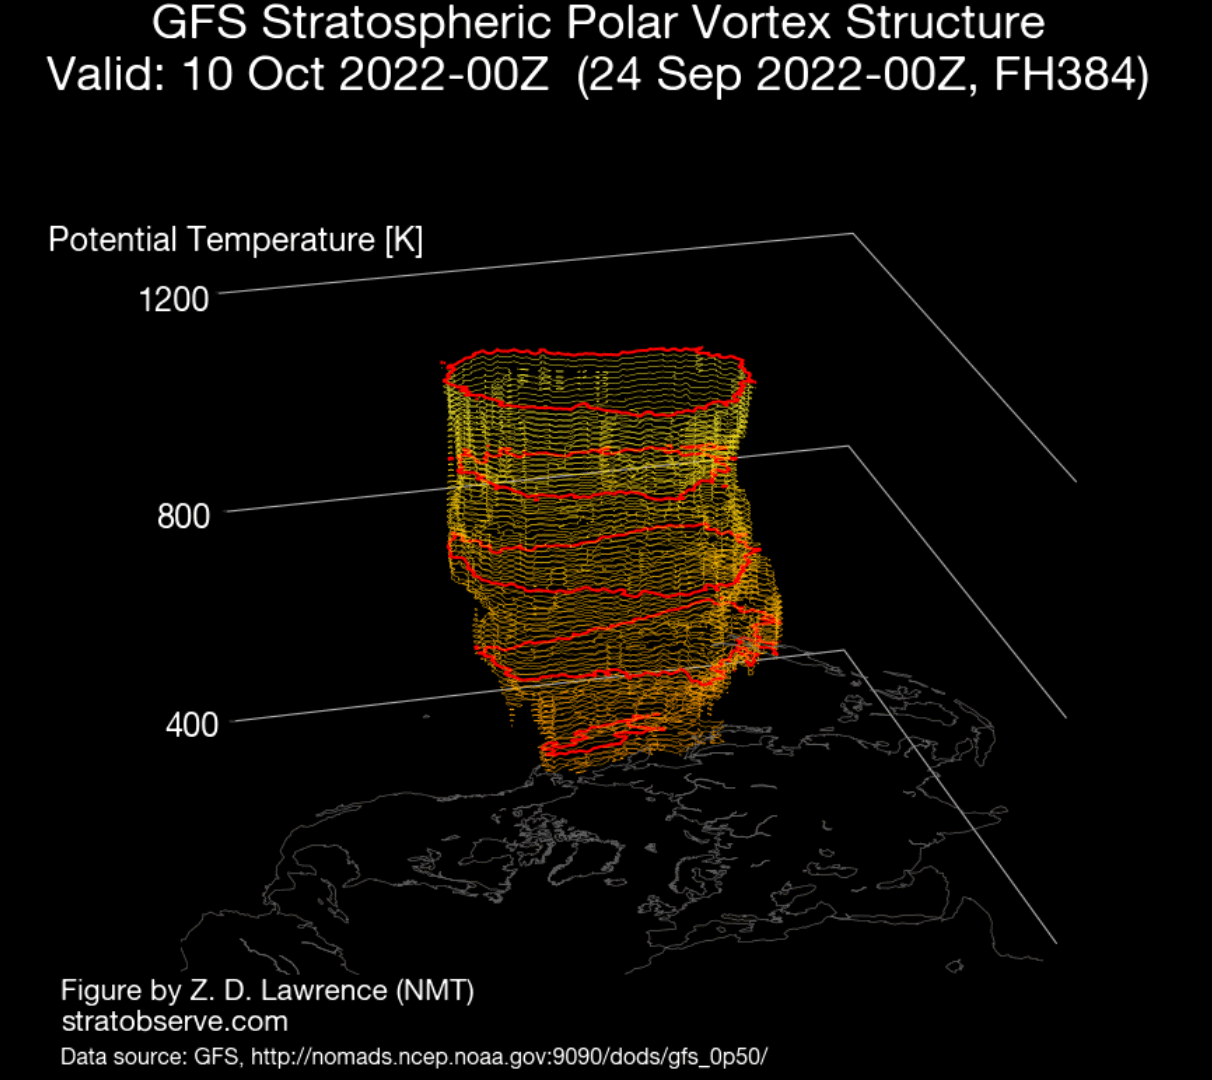 stratospheric-polar-vortex-3-dimensional-structure-north-hemisphere-forecast-mid-october-2022-disruption